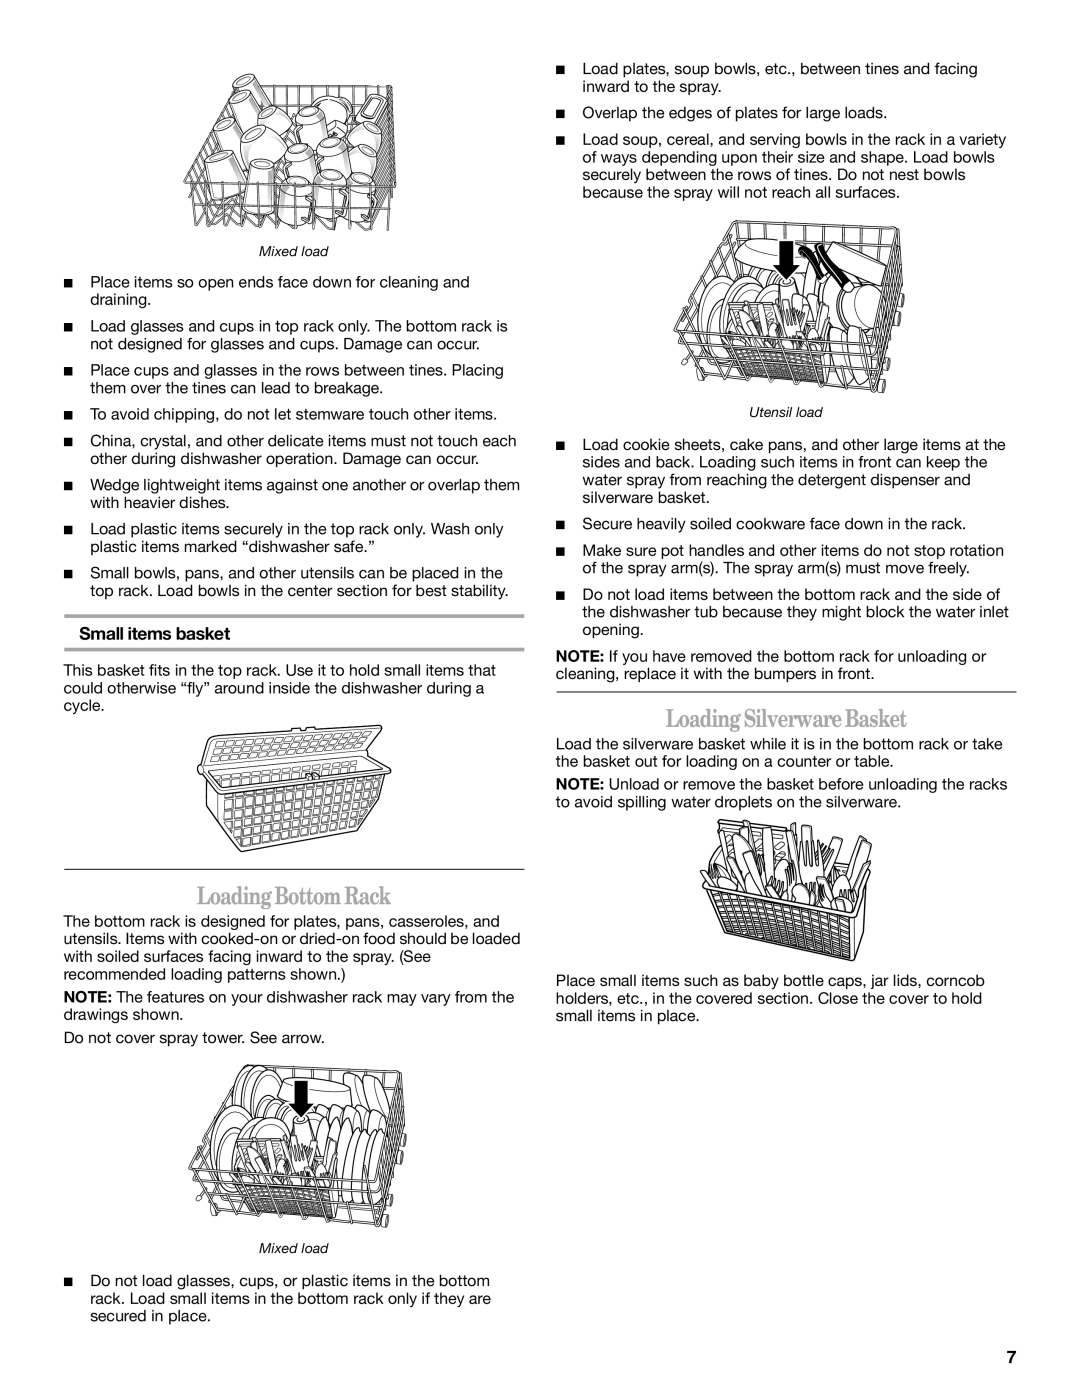 Whirlpool ISD4700 manual Loading Silverware Basket, Loading Bottom Rack, Small items basket 